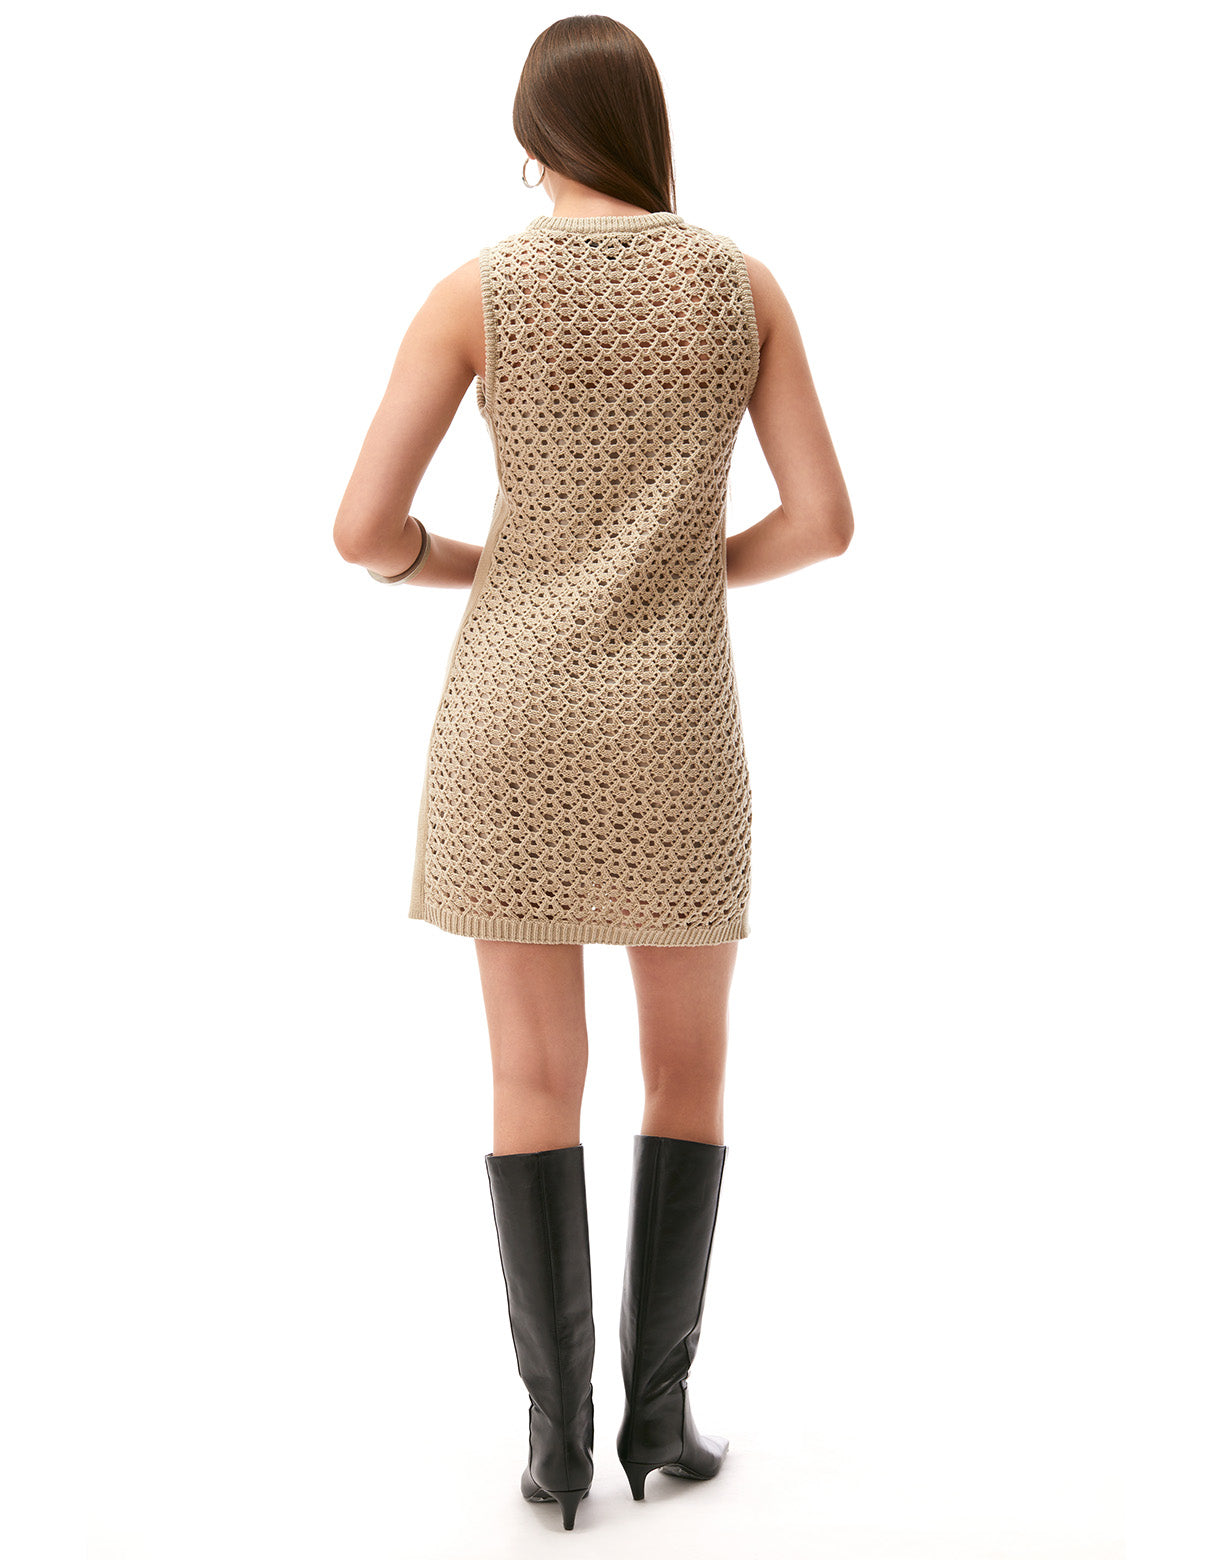 della sleeveless mini dress stone beige cotton crochet - figure flattering work to date night dresses for women